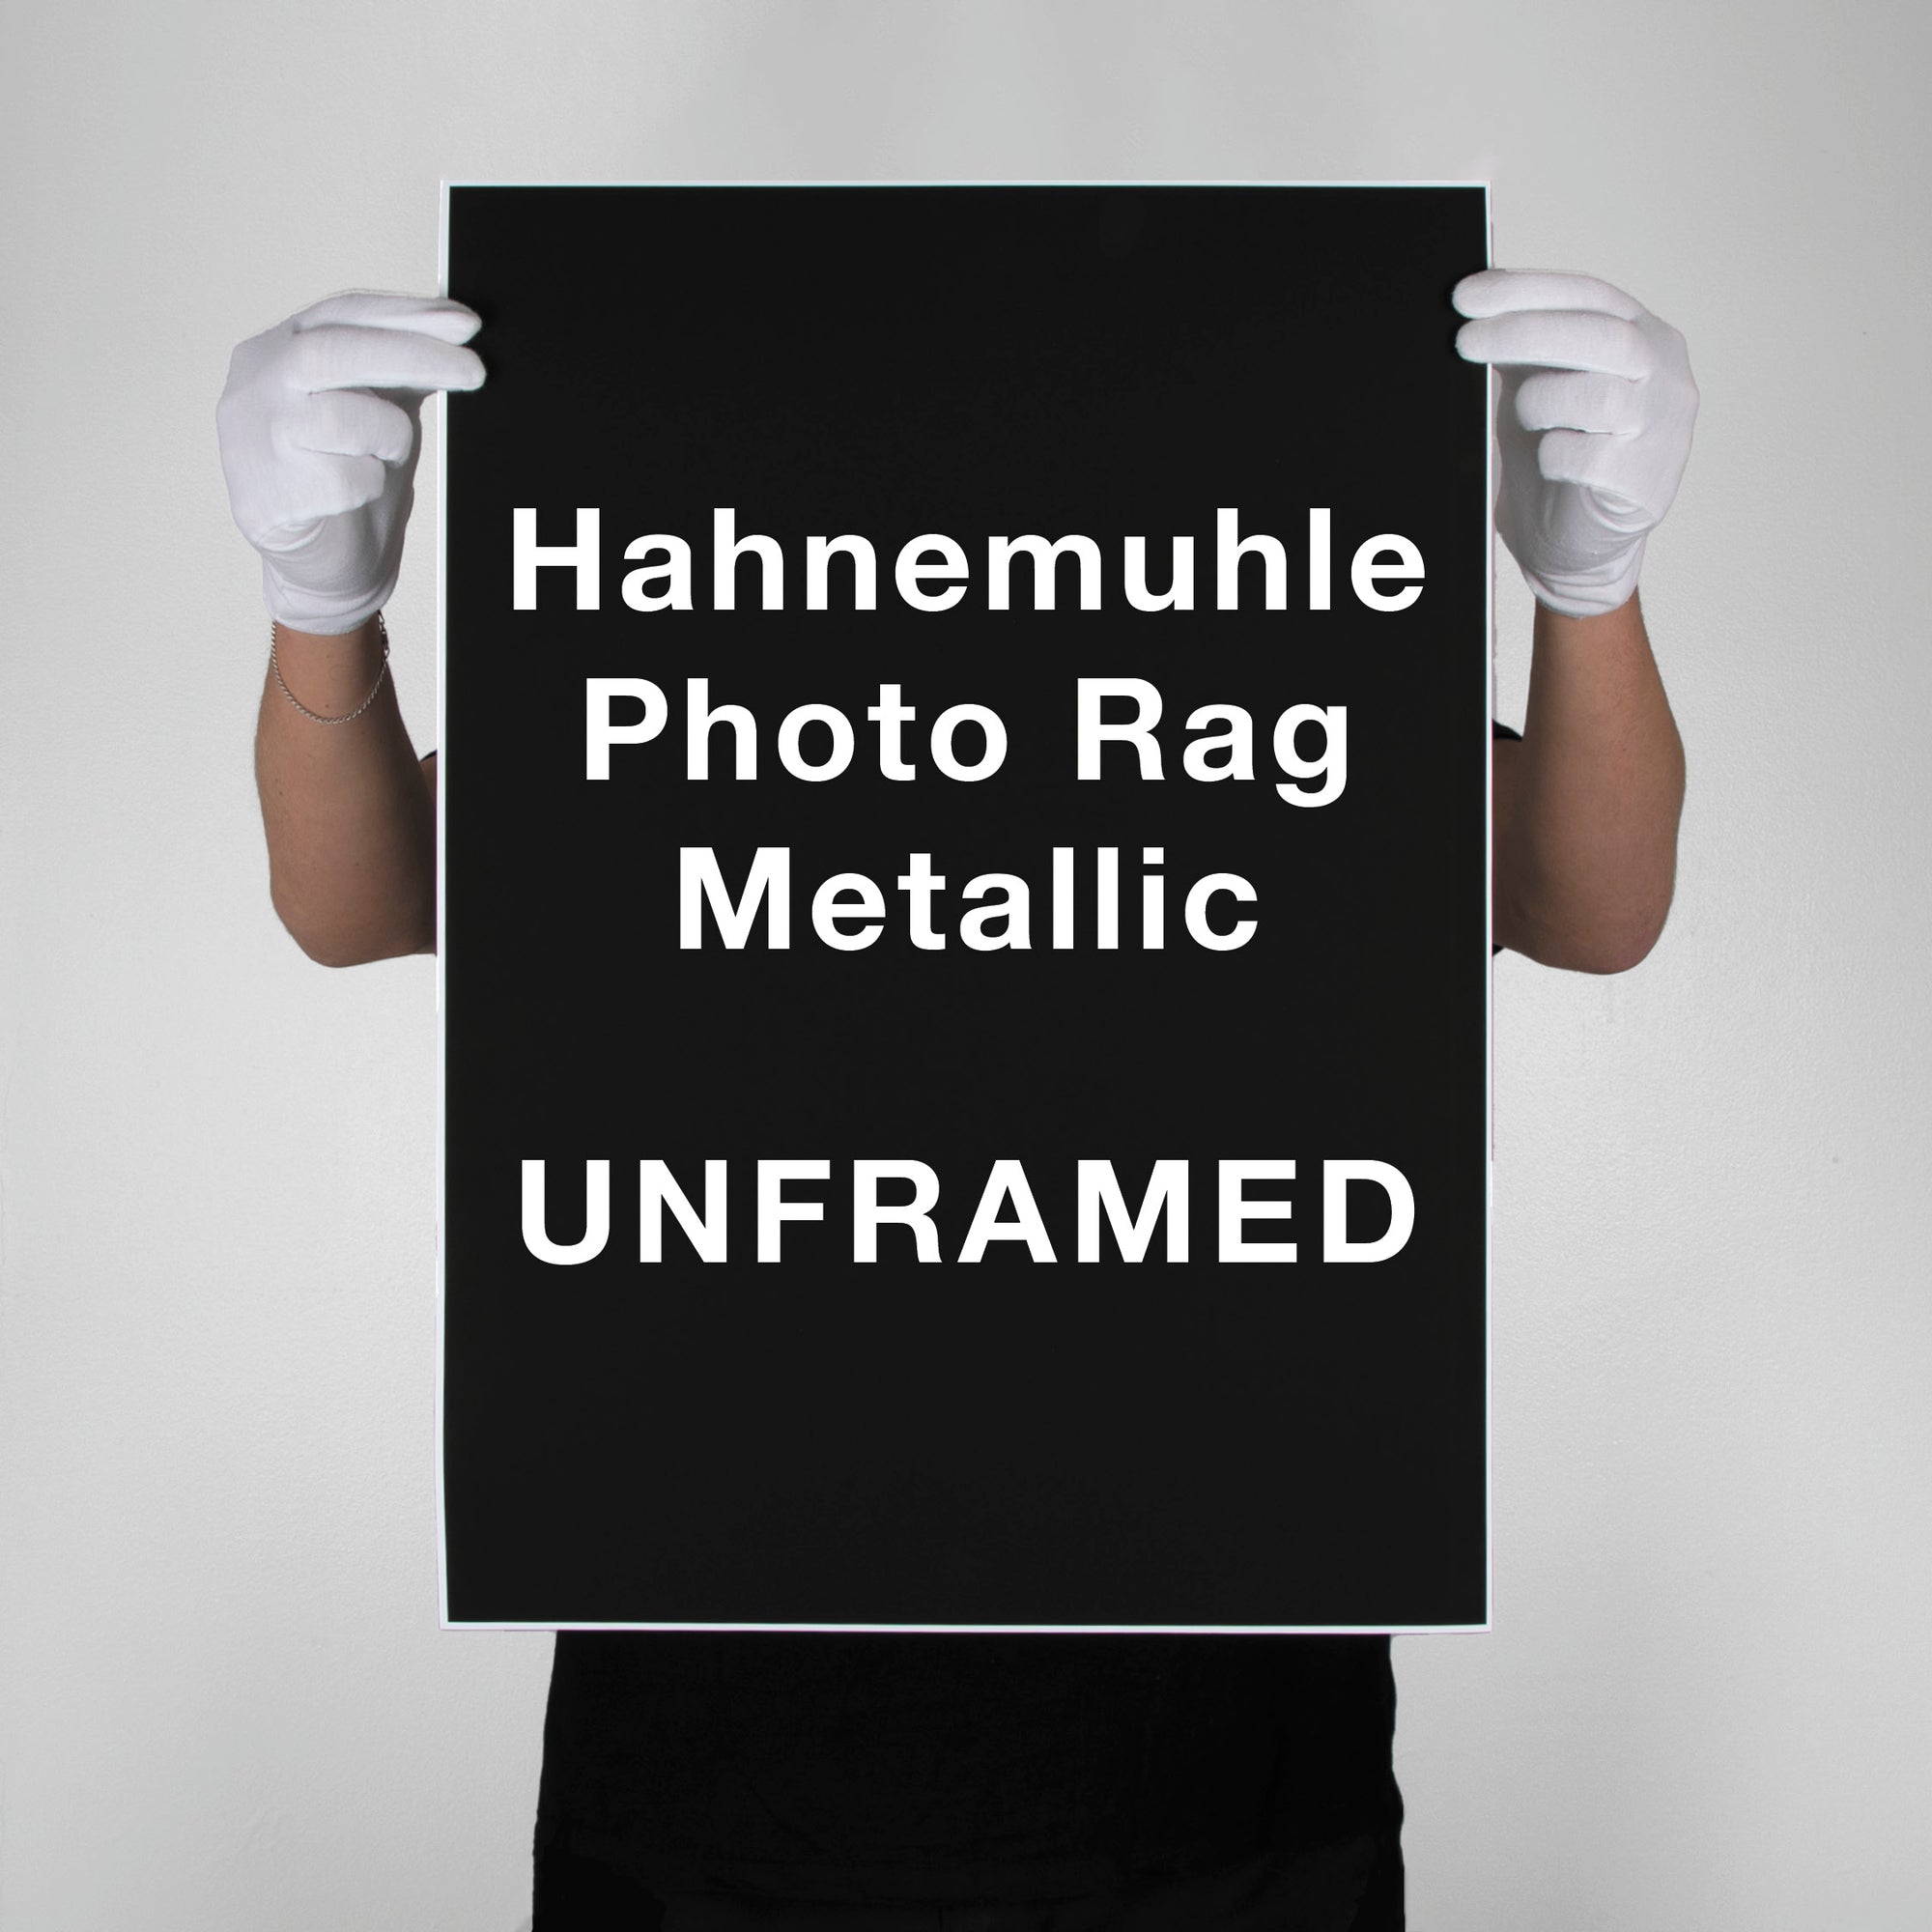 Hahnemuhle Photo Rag Metallic | FRAMED